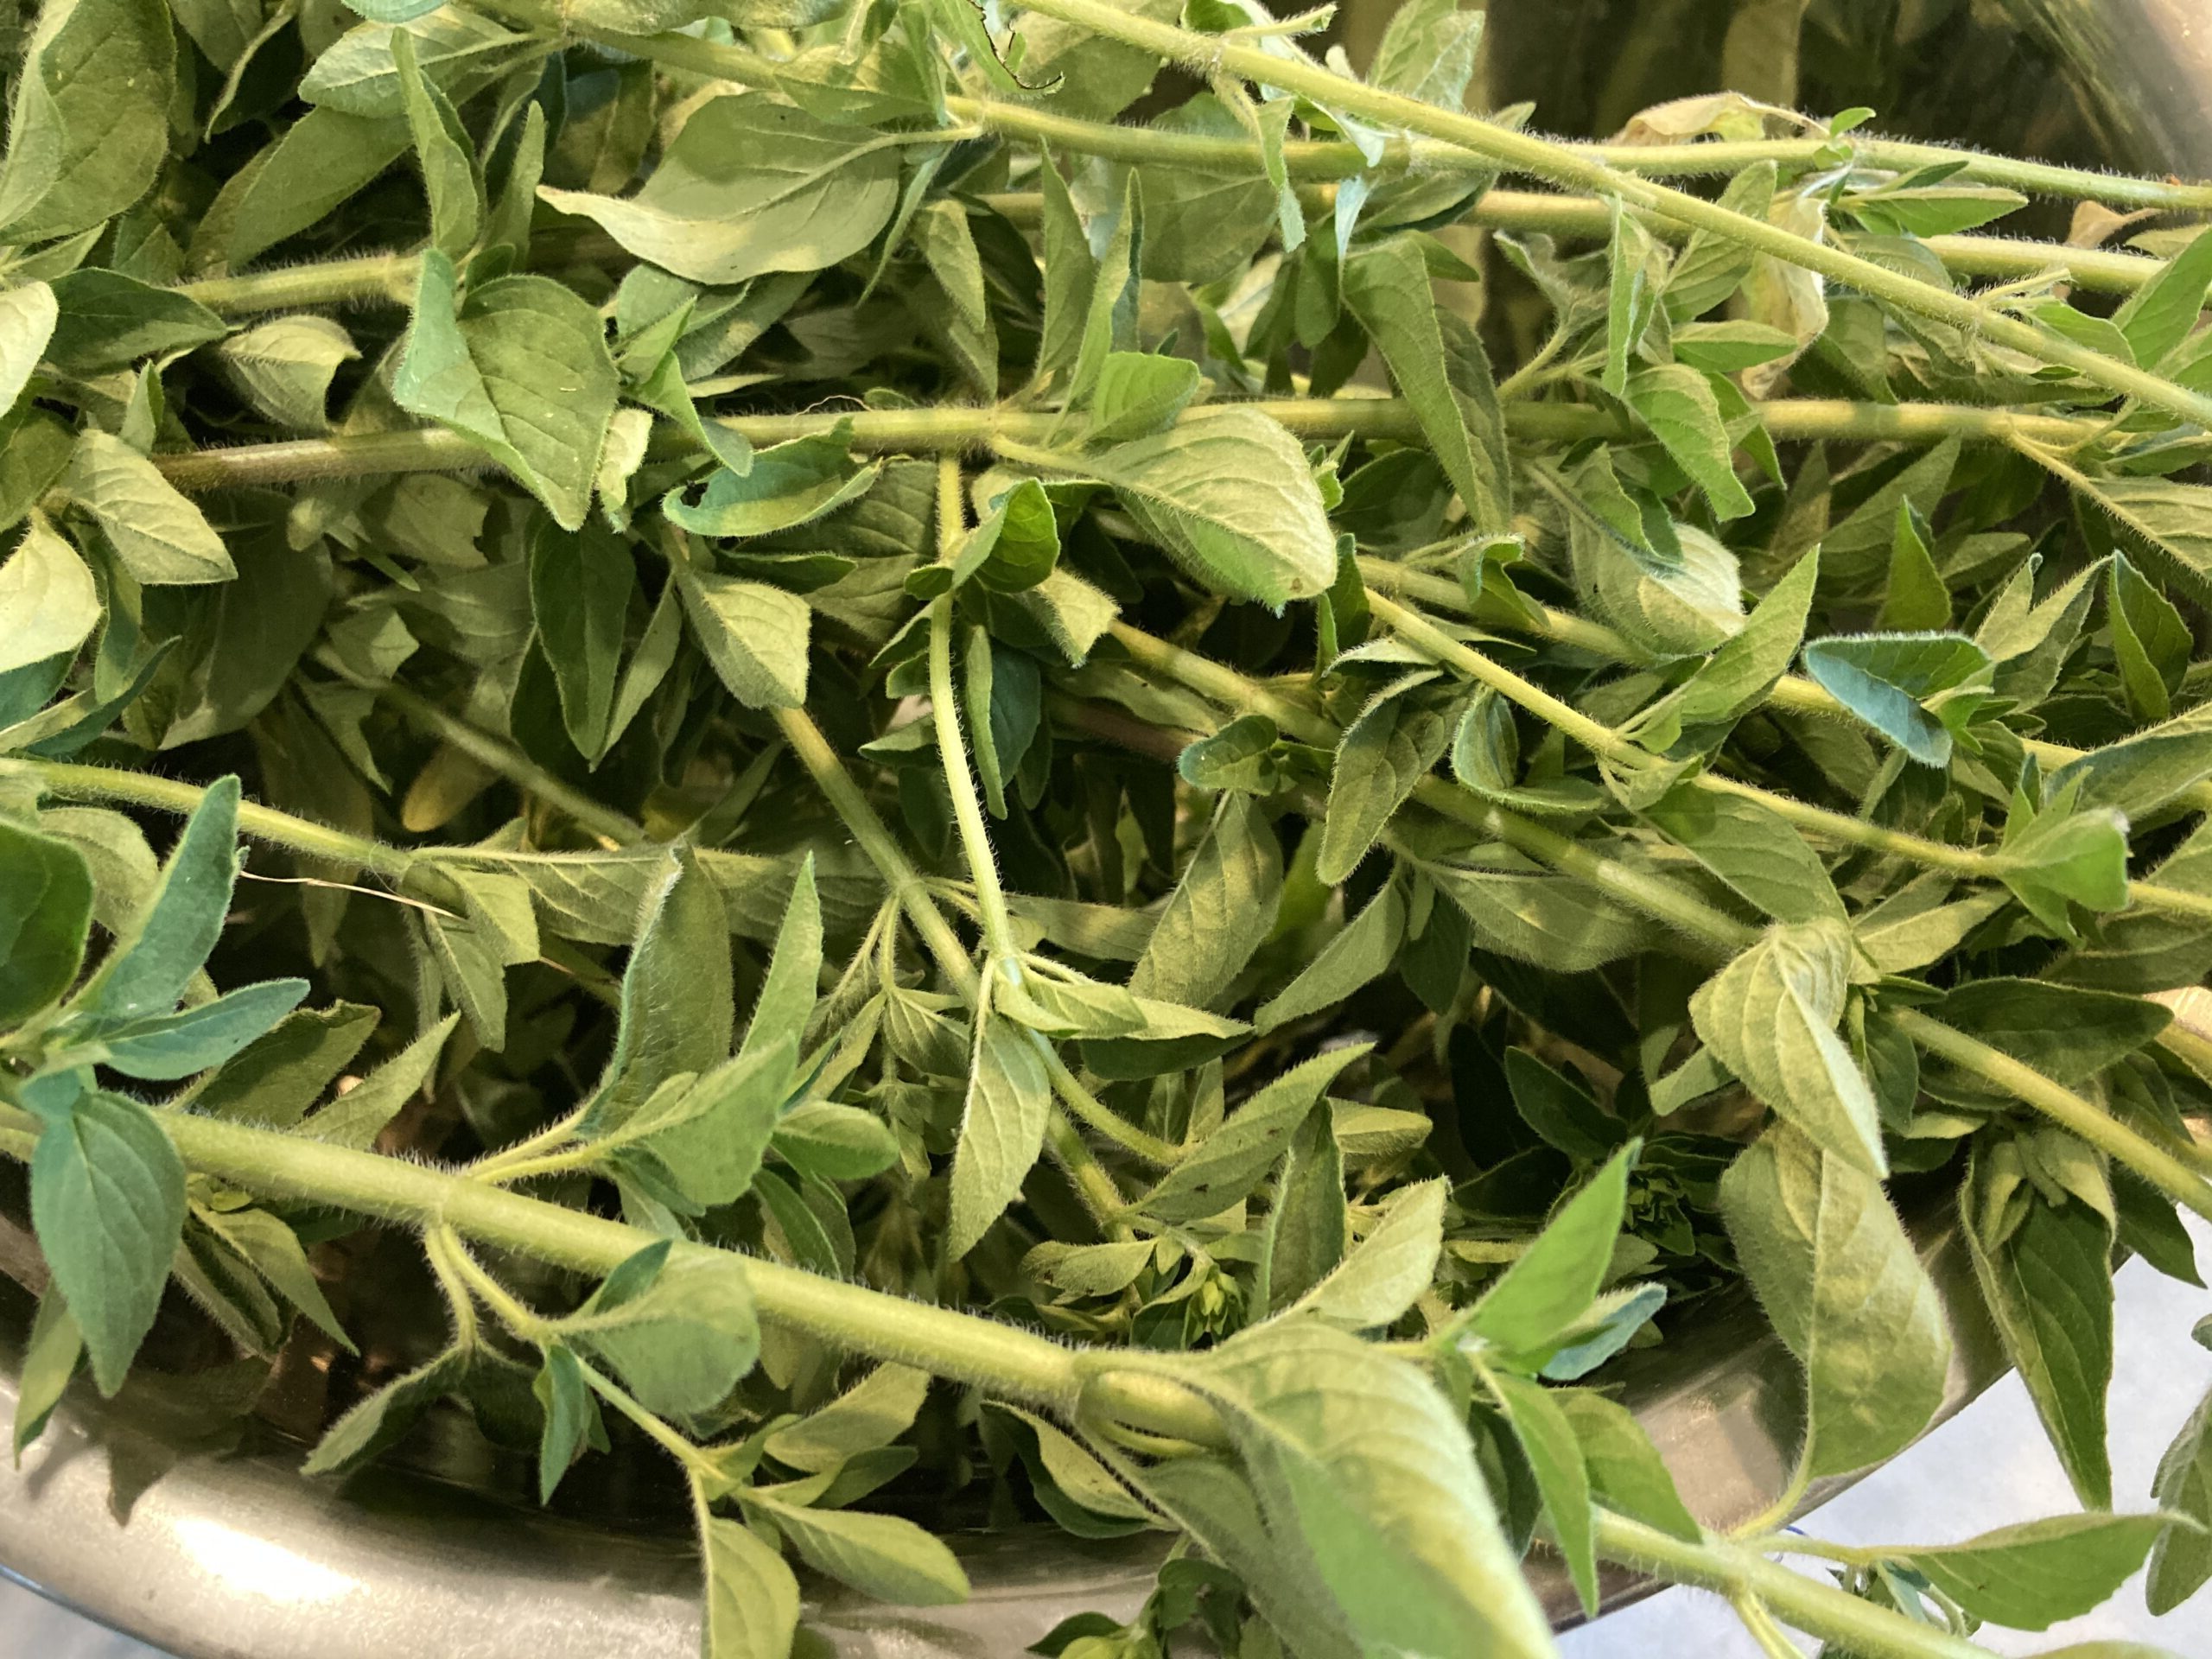 Bowl of freshly picked oregano